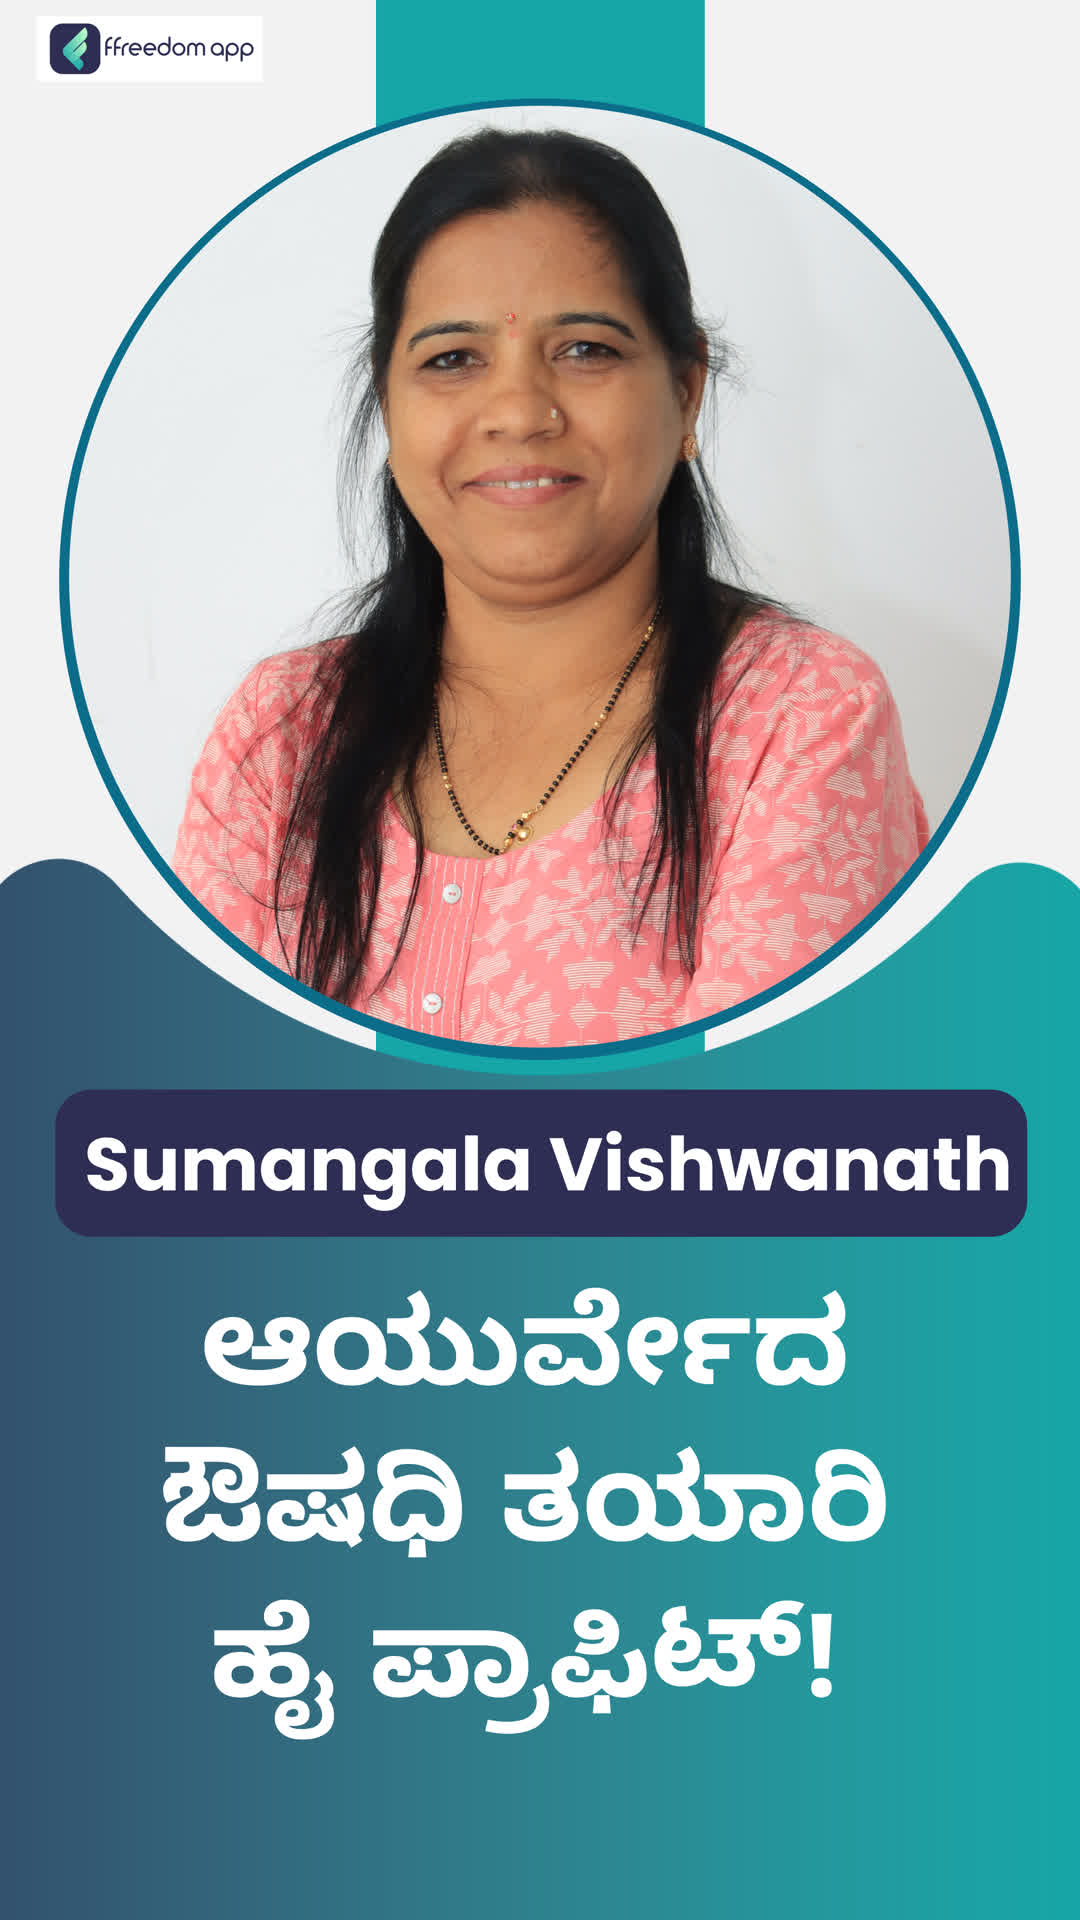 sumangala vishwanath's Honest Review of ffreedom app - Uttara Kannada ,Telangana